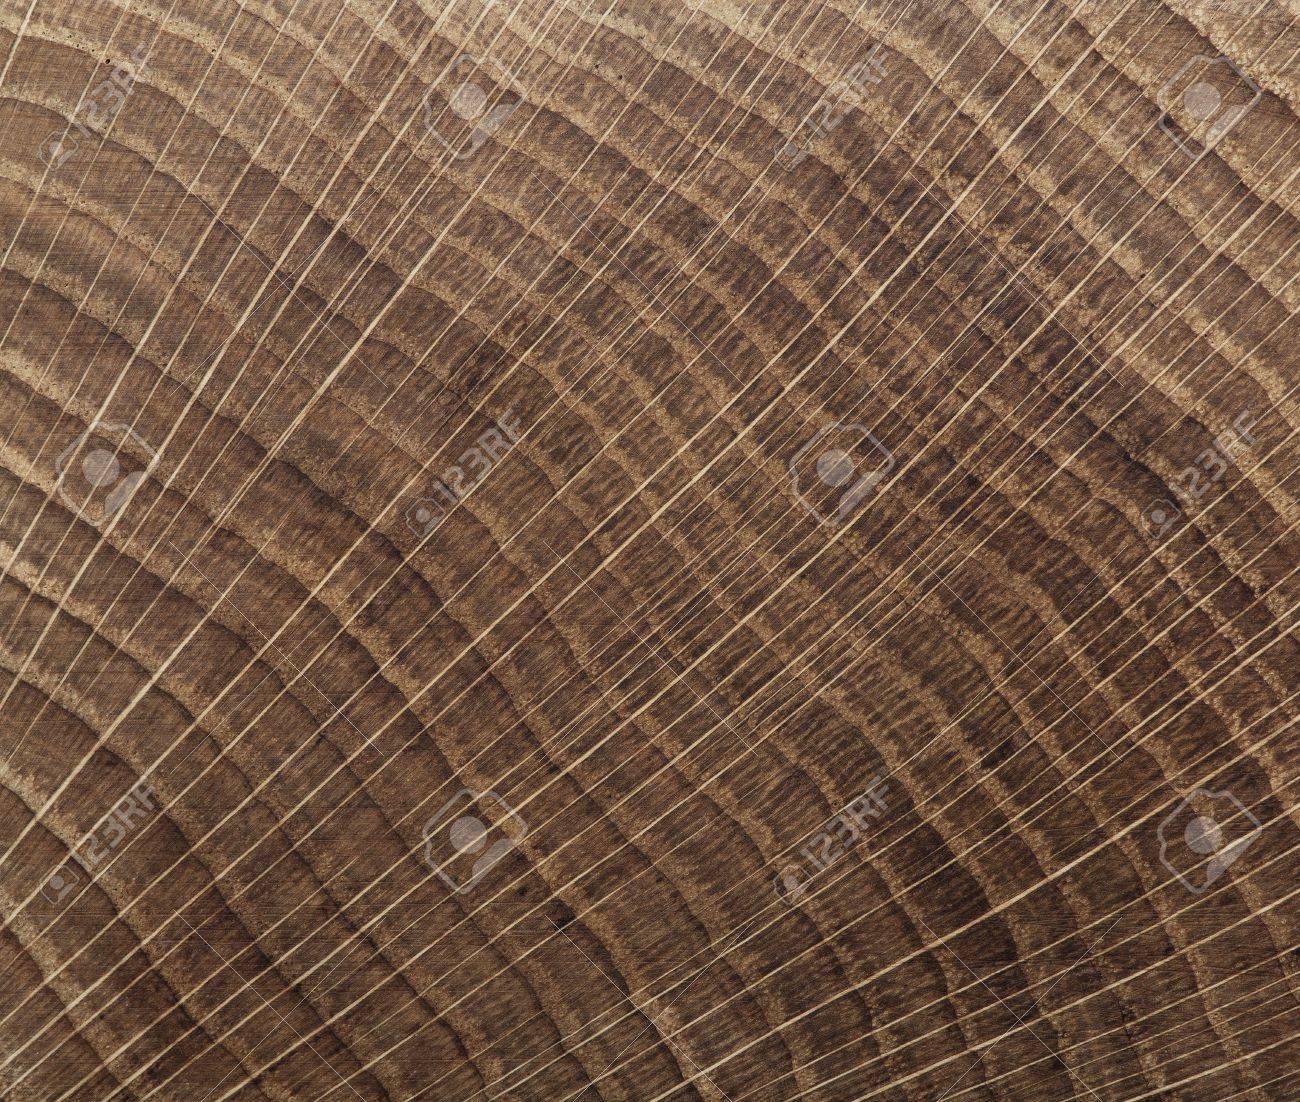 End Grain Wood Background Cross Cut Oak Texture Close Up Stock